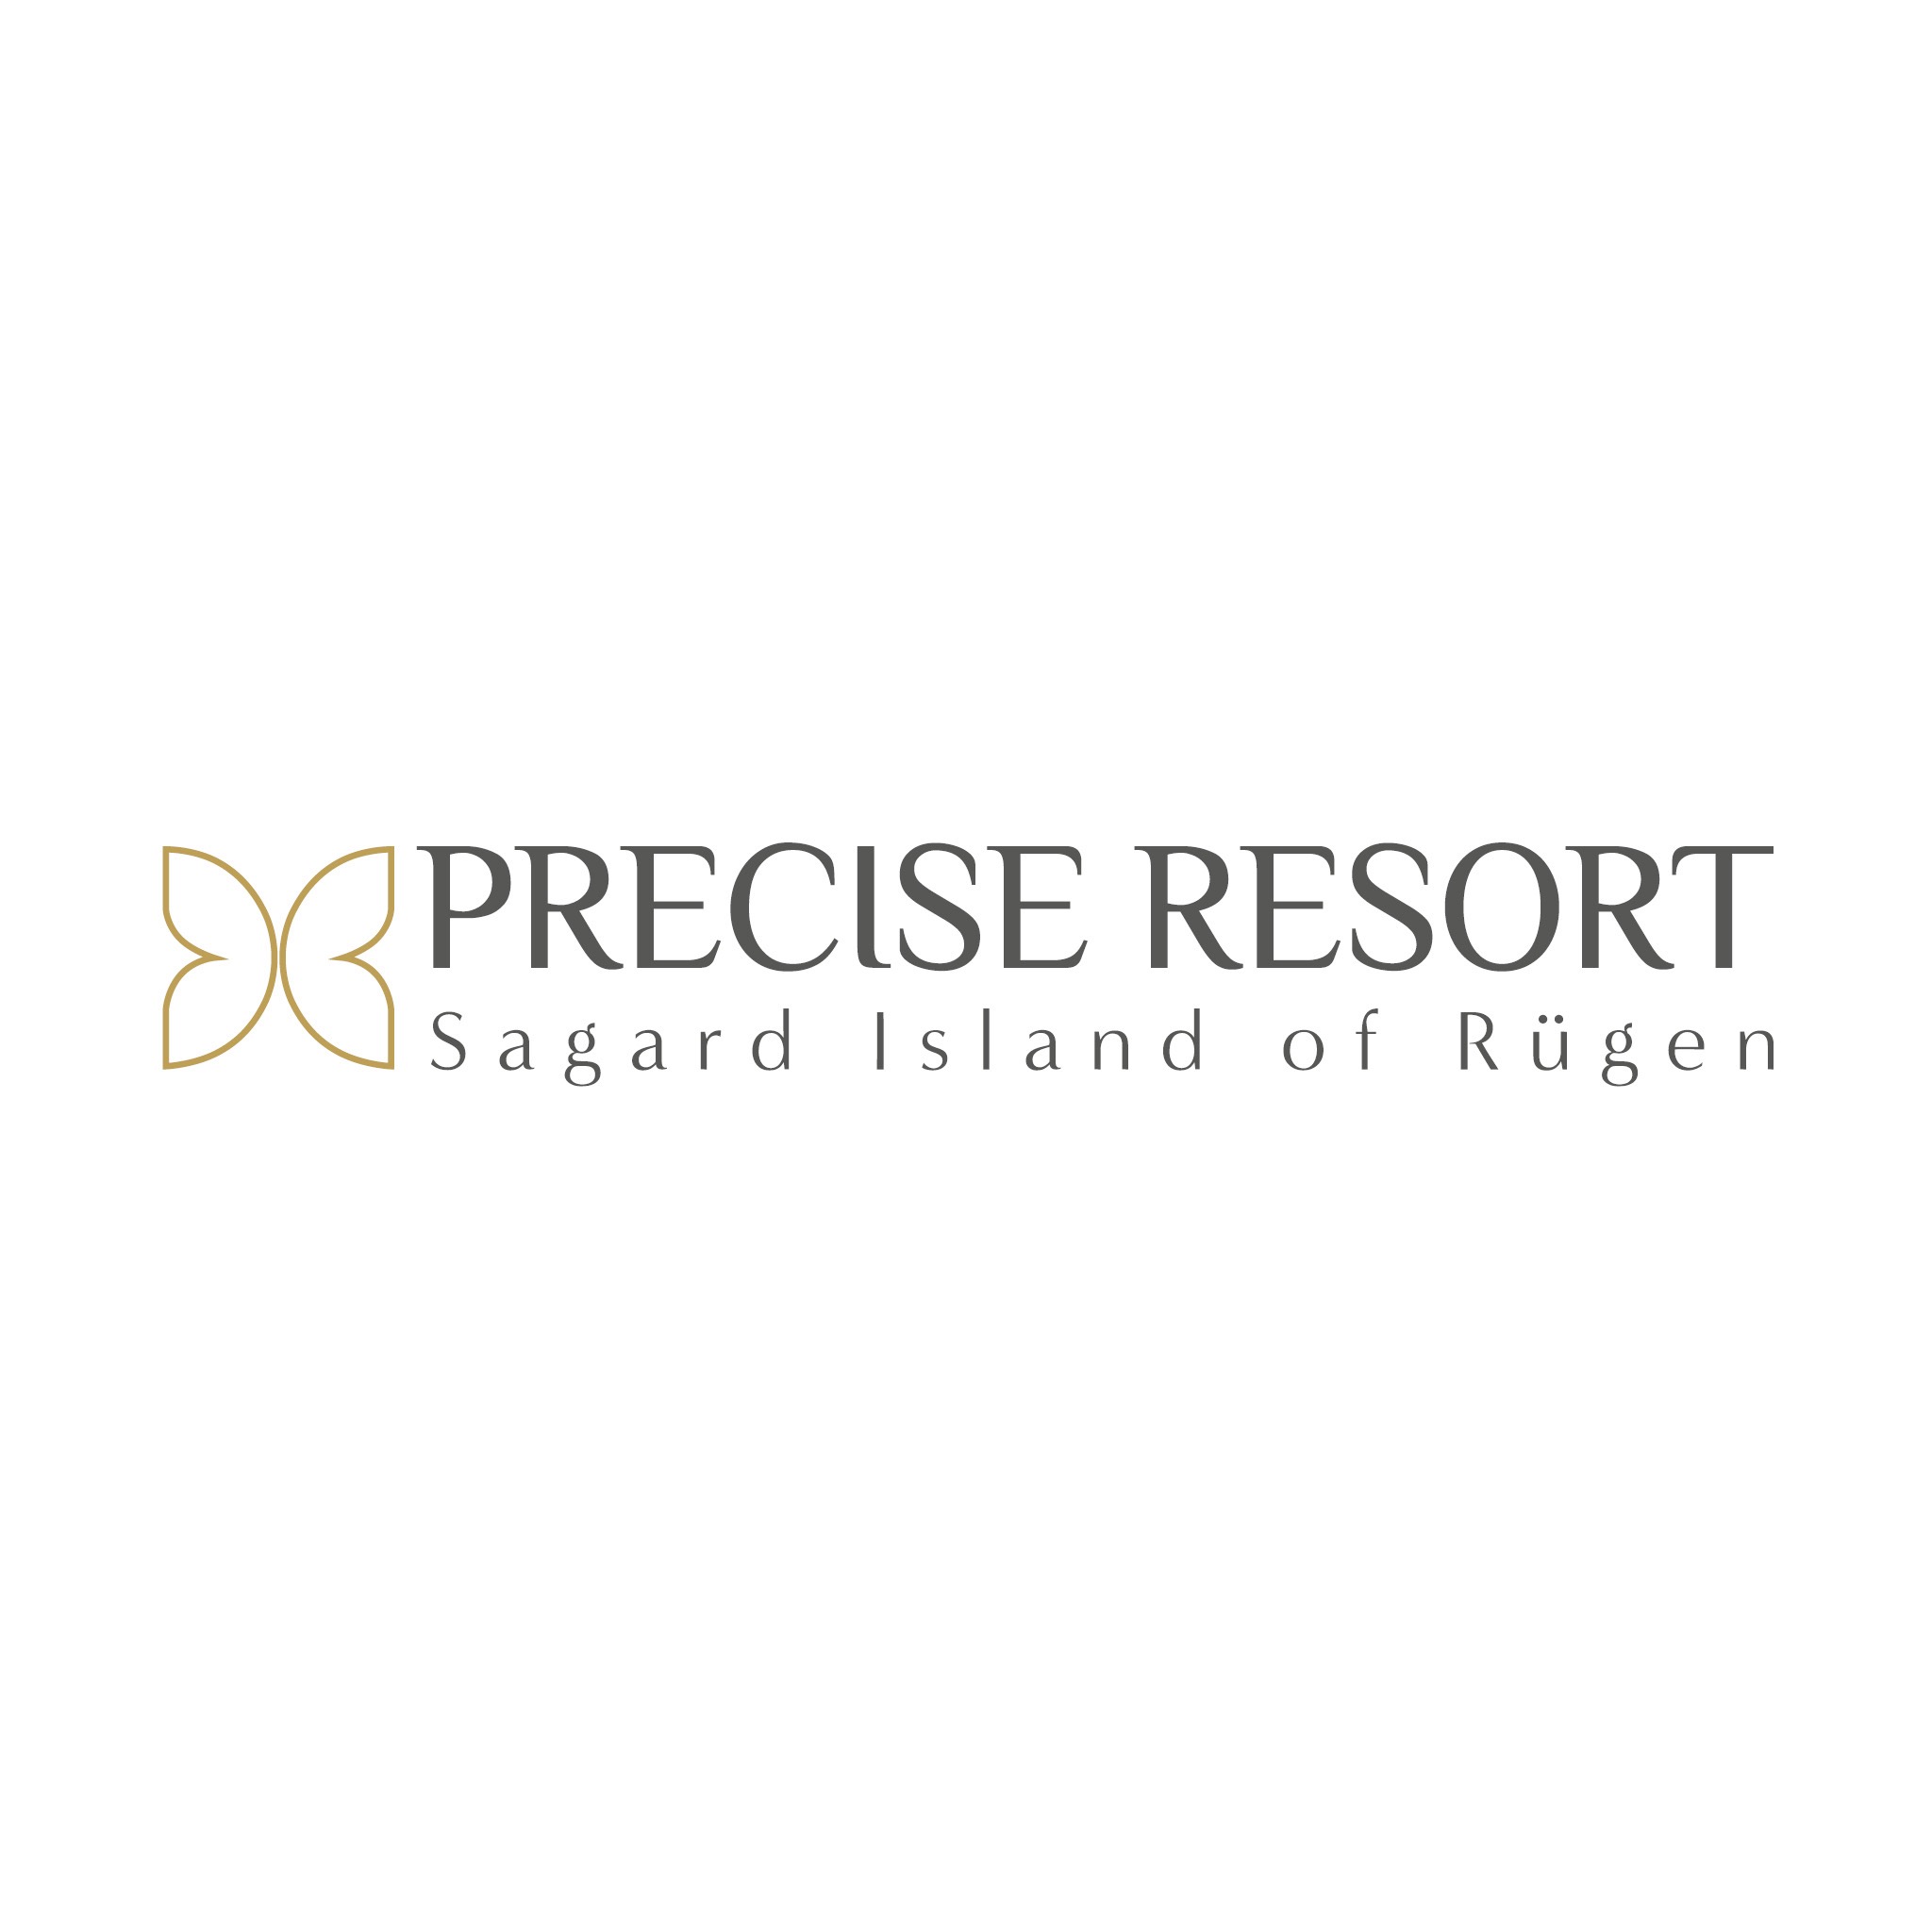 Precise Resort Rügen in Sagard - Logo